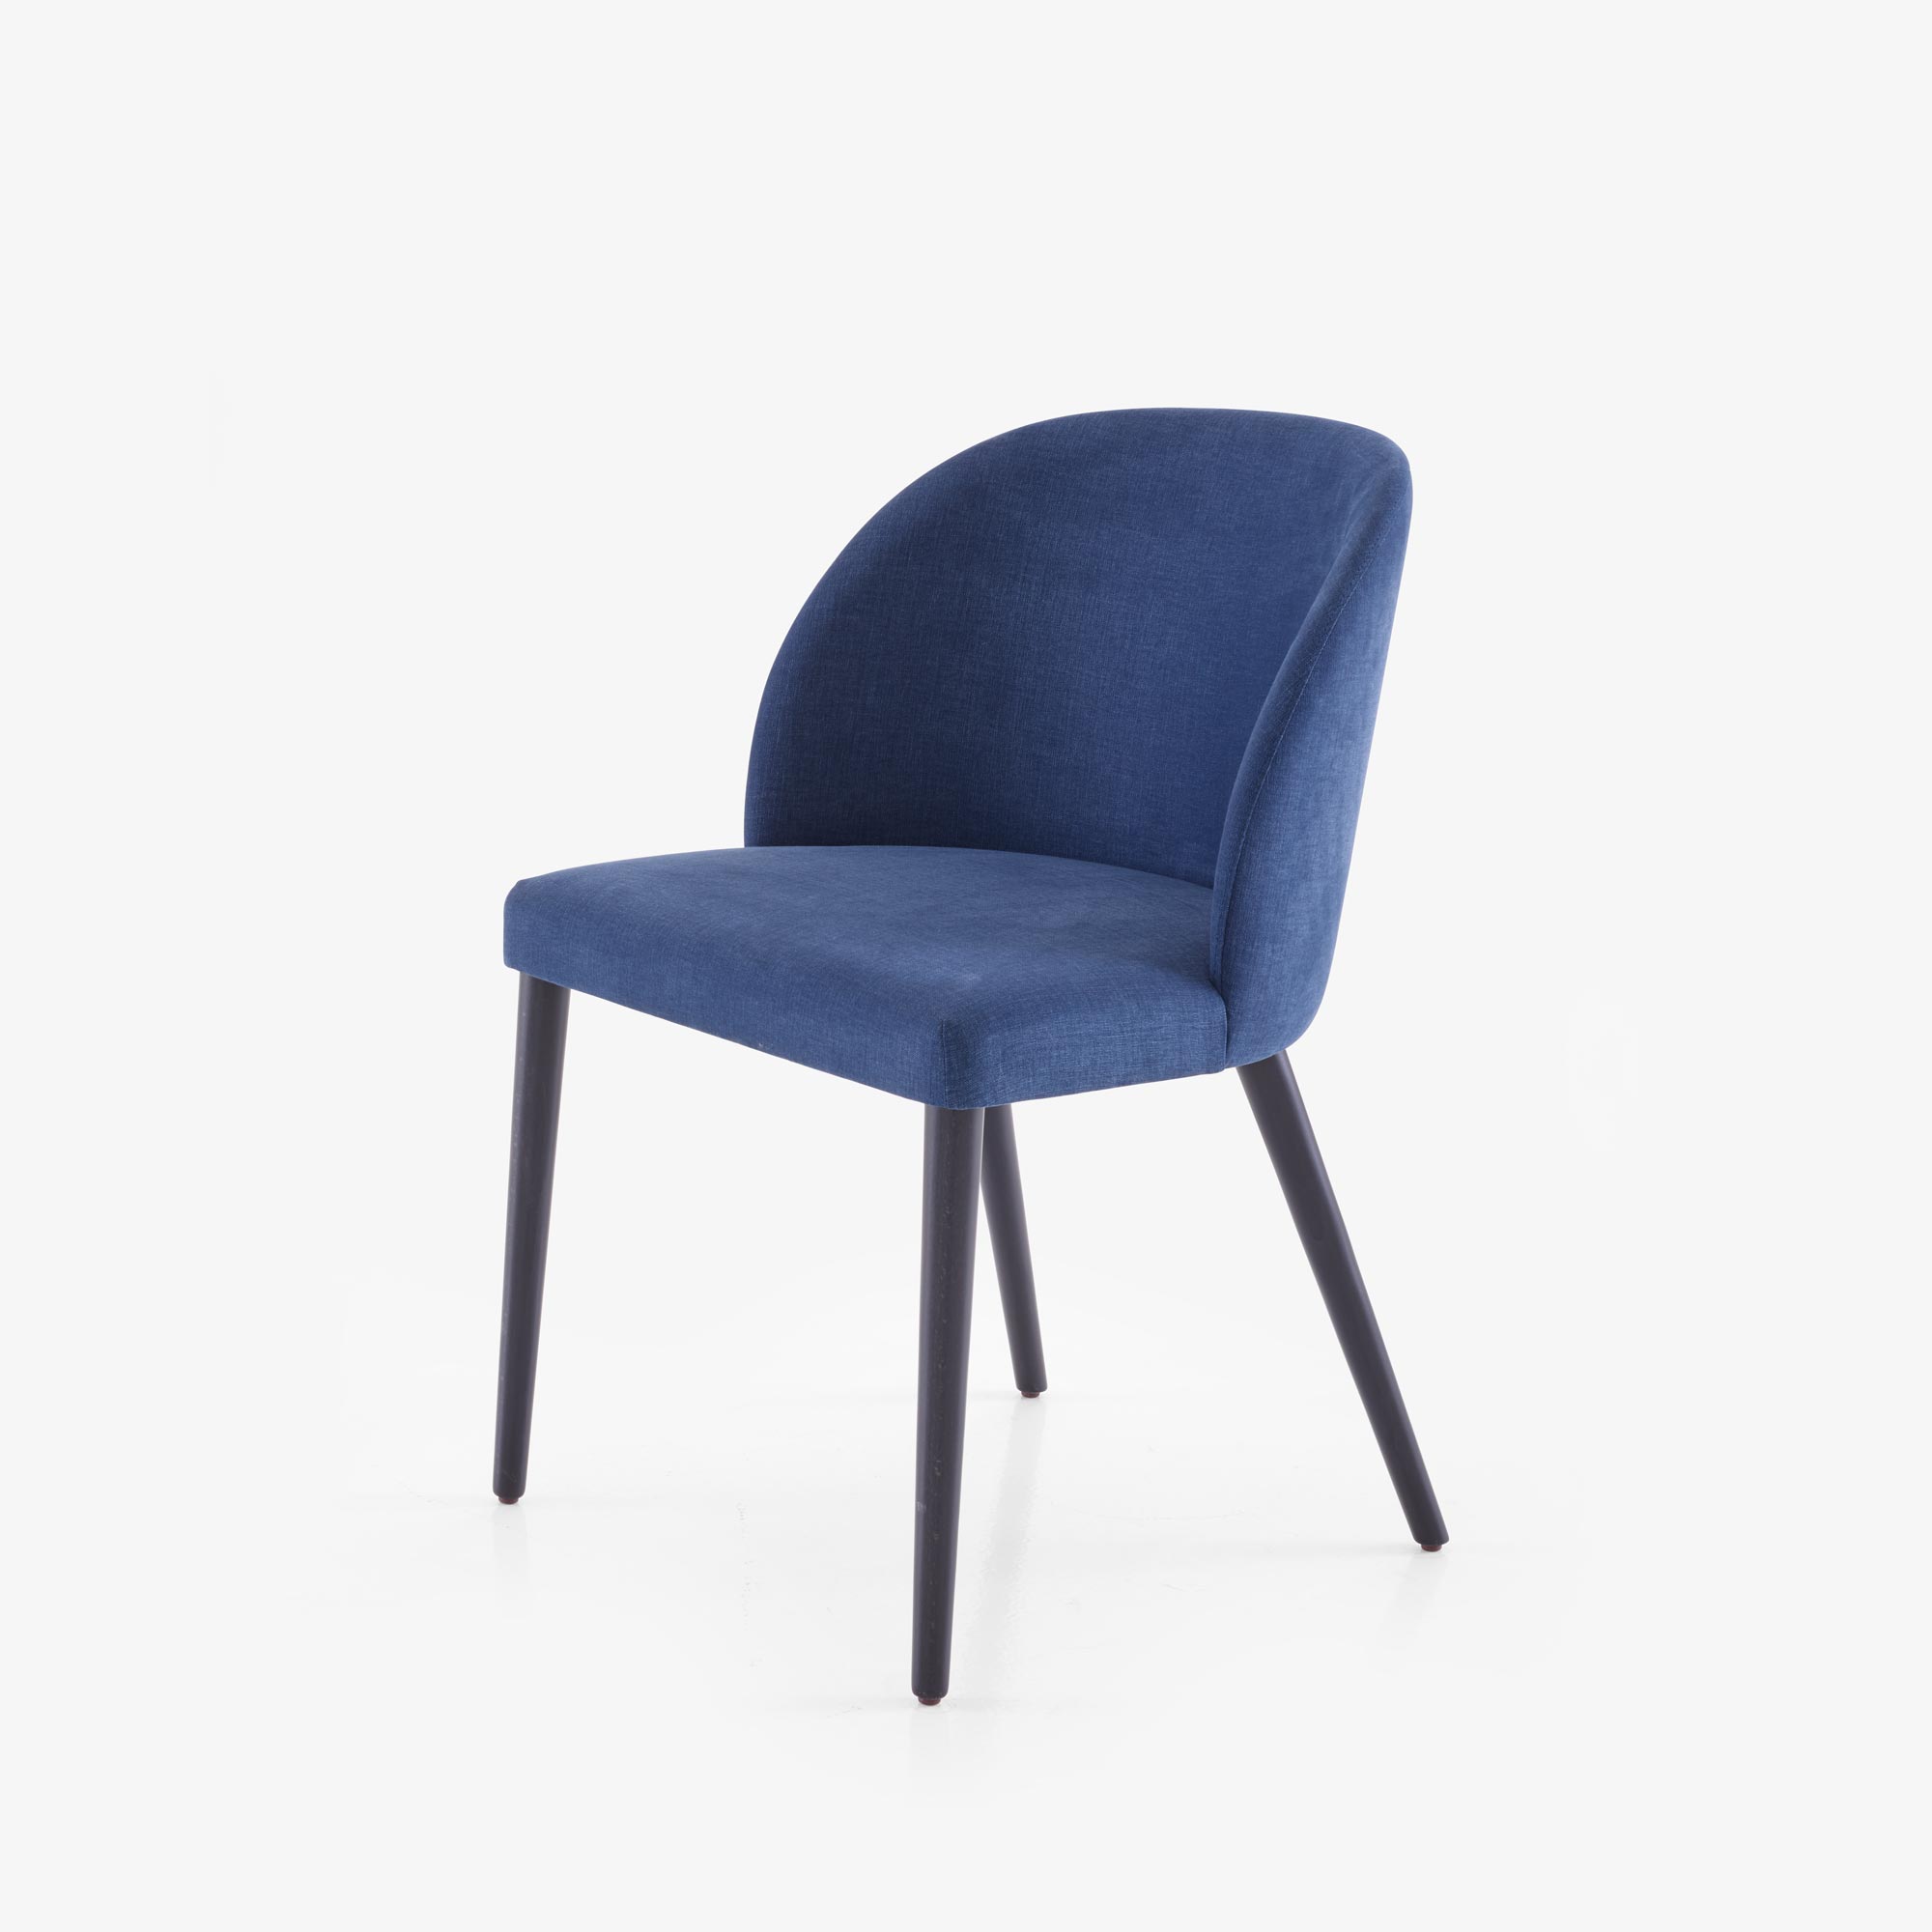 Image Chair fabric-bleu nuit (midnight blue)  2